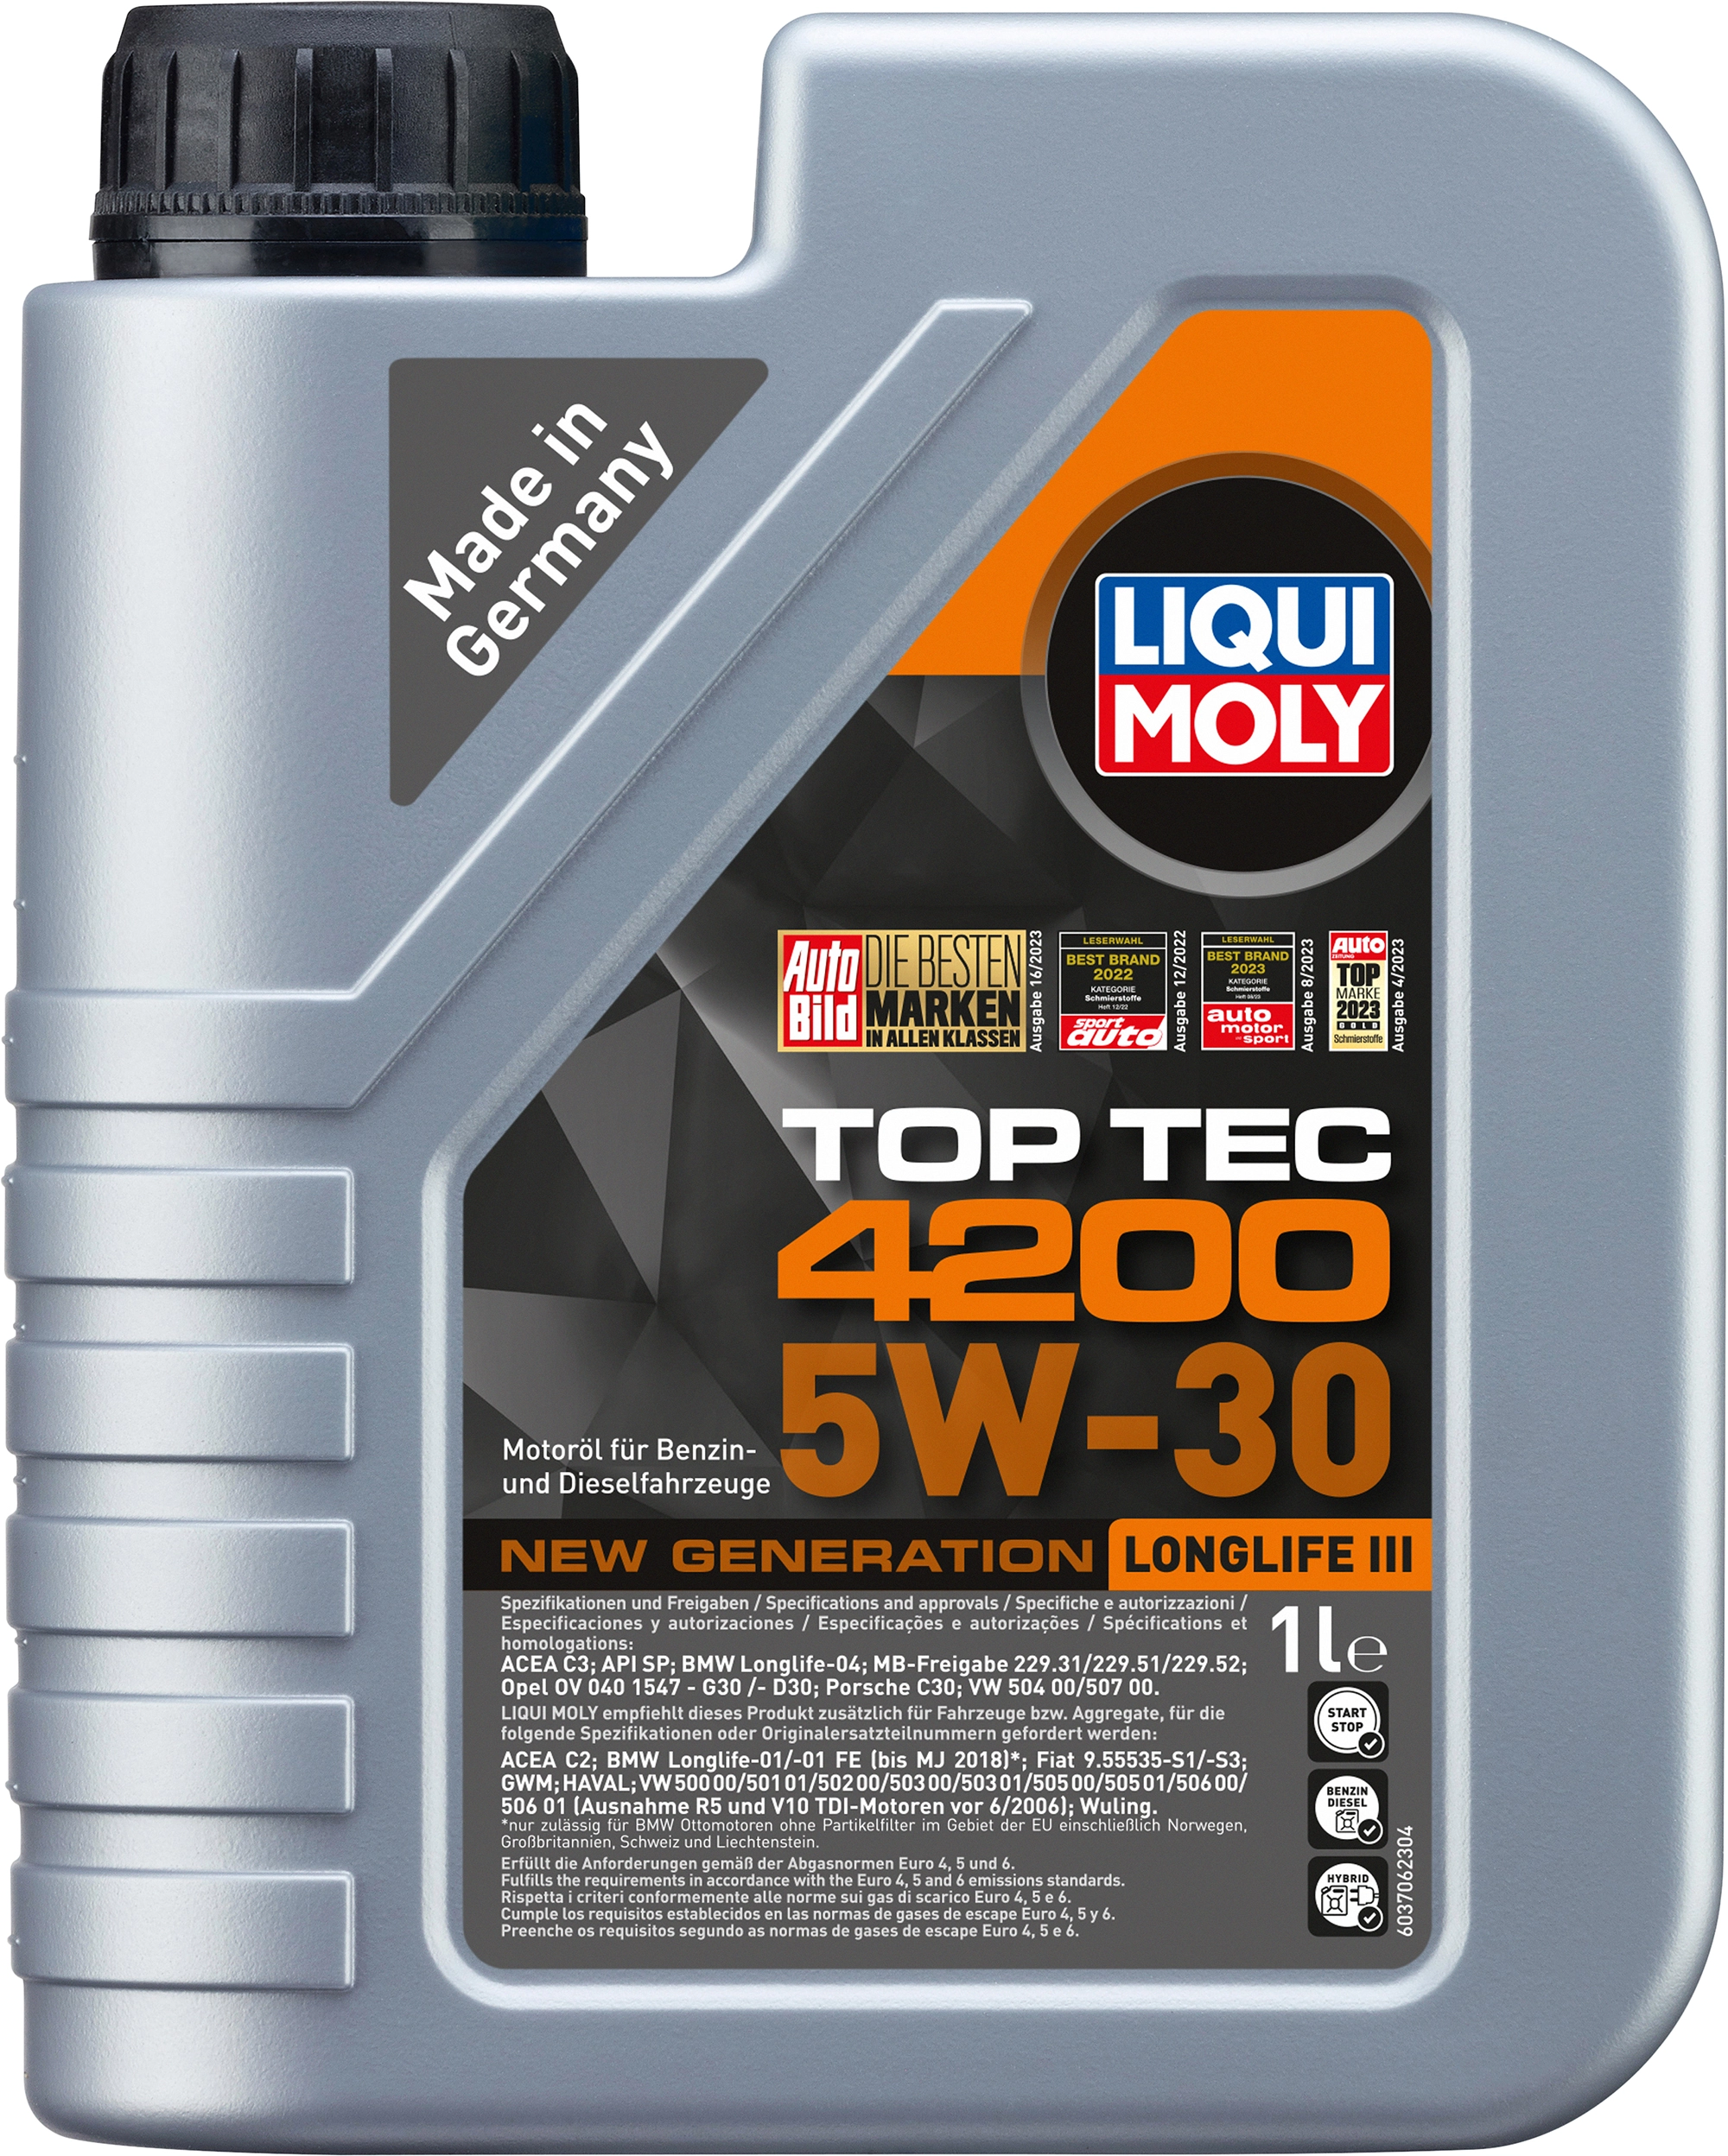 Liqui Moly TOP TEC 4200 5W-30 3706 Leichtlaufmotoröl 1 l kaufen